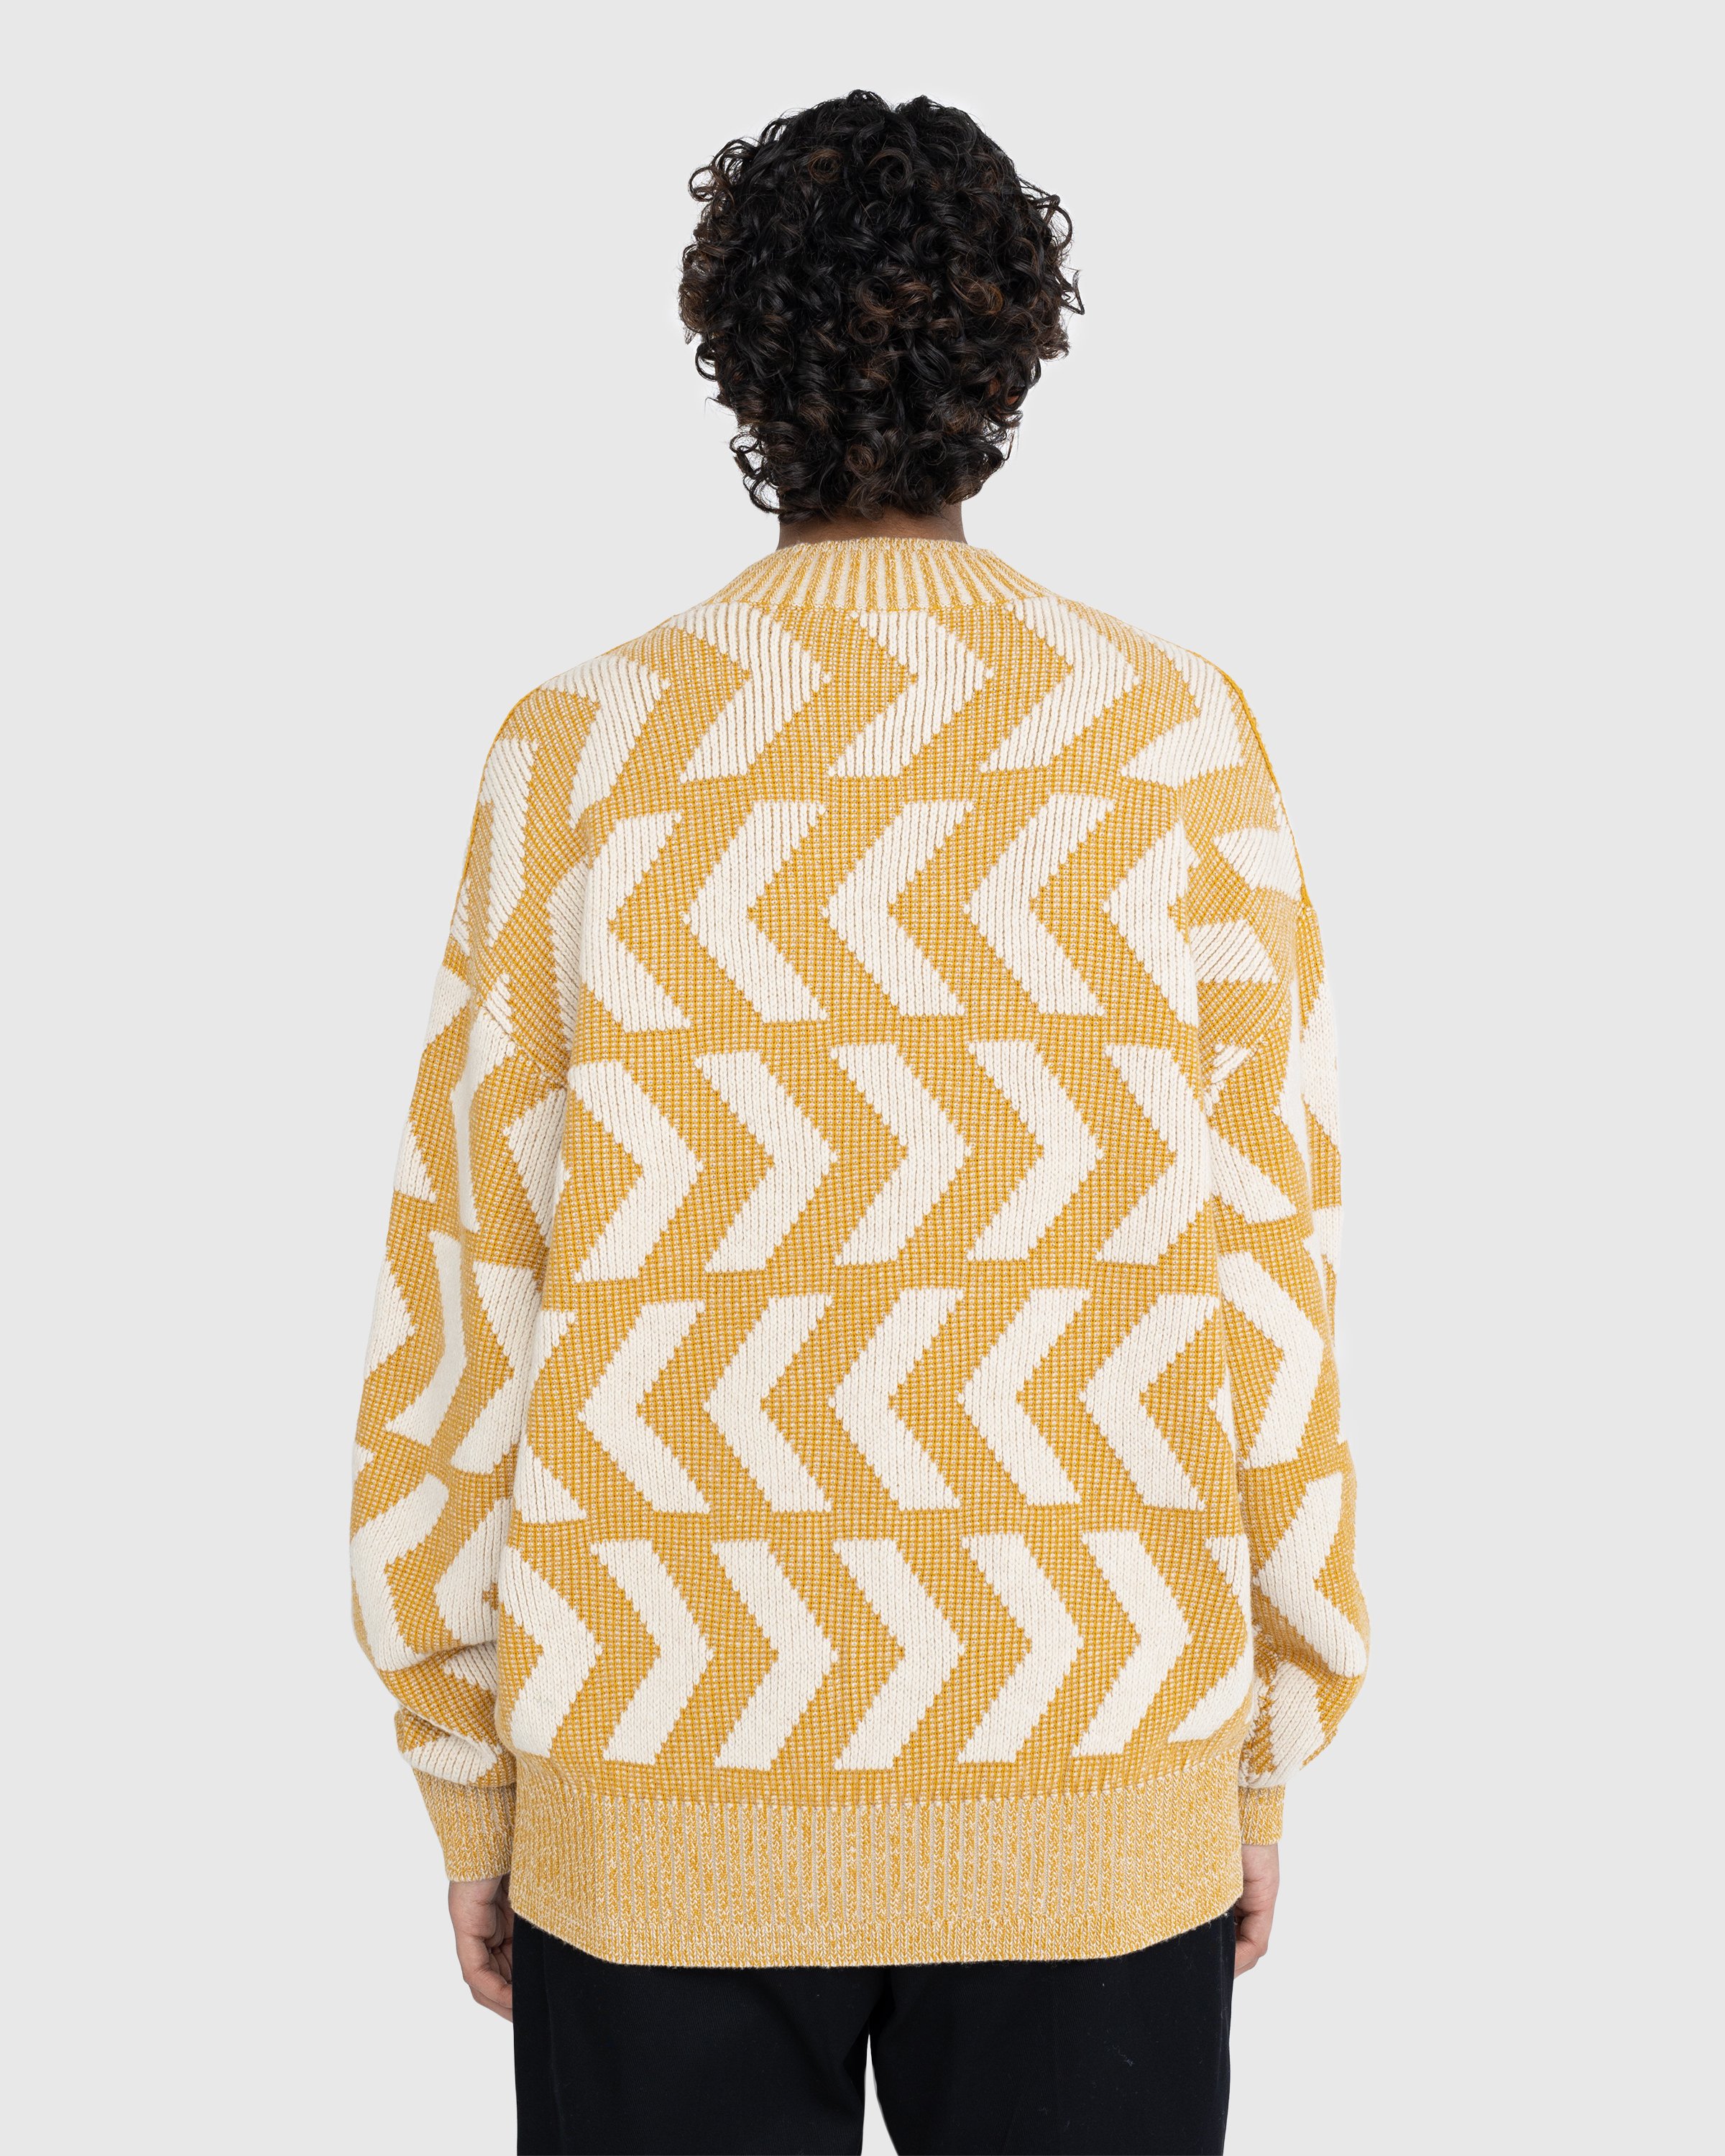 Acne Studios - Face Crossbones and Arrow Crewneck Sweater Yellow - Clothing - Yellow - Image 4